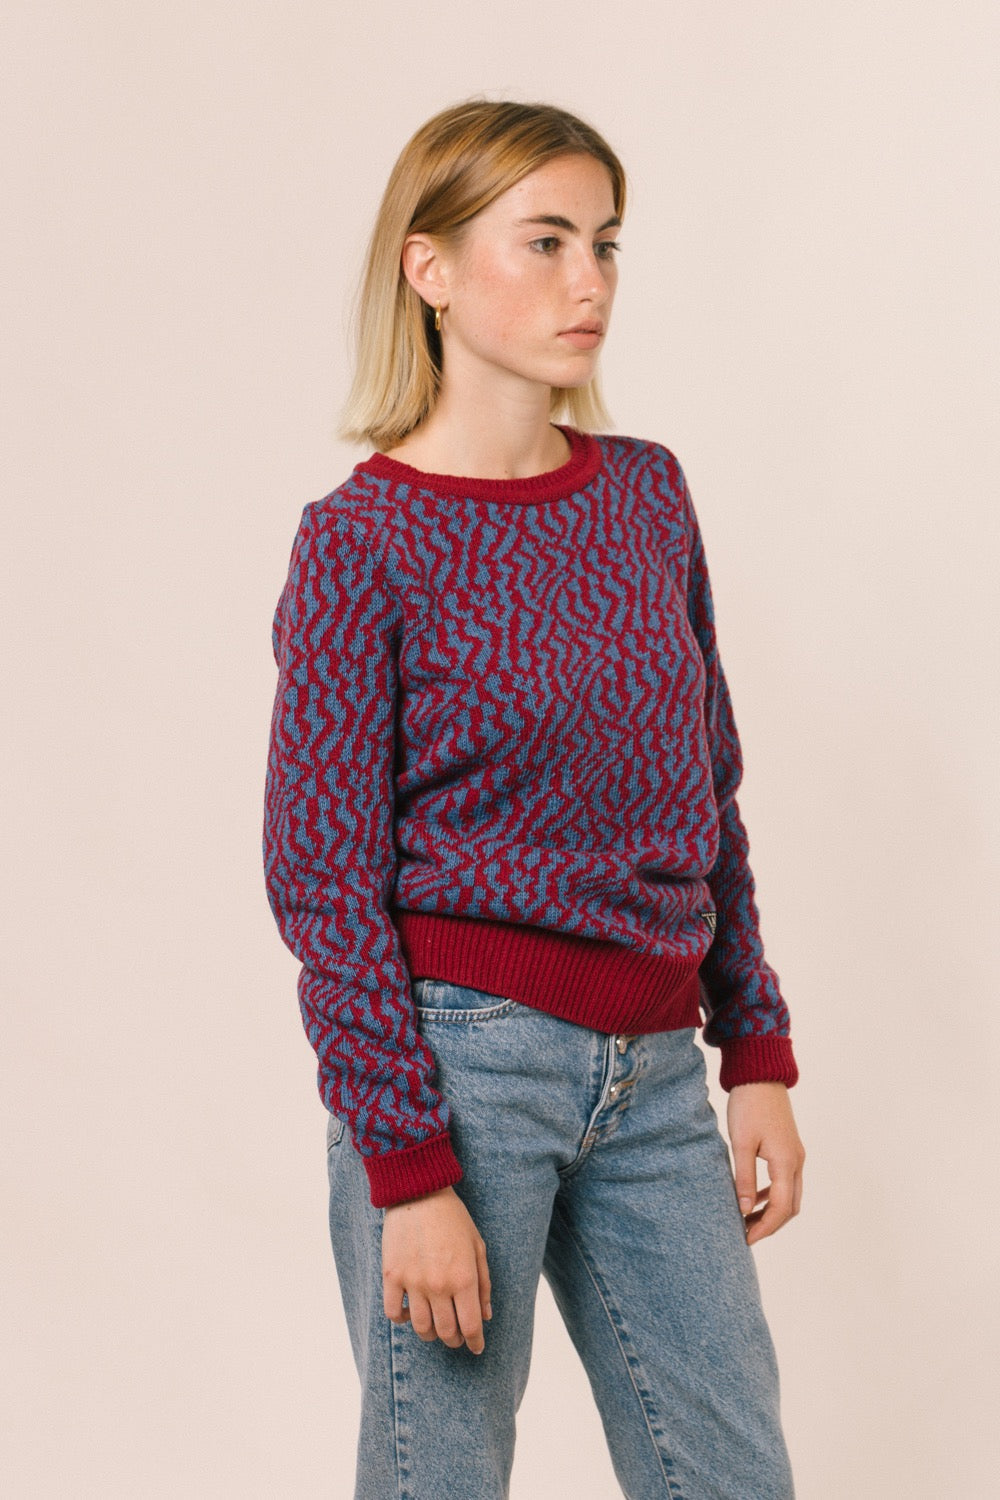 Dora sweater